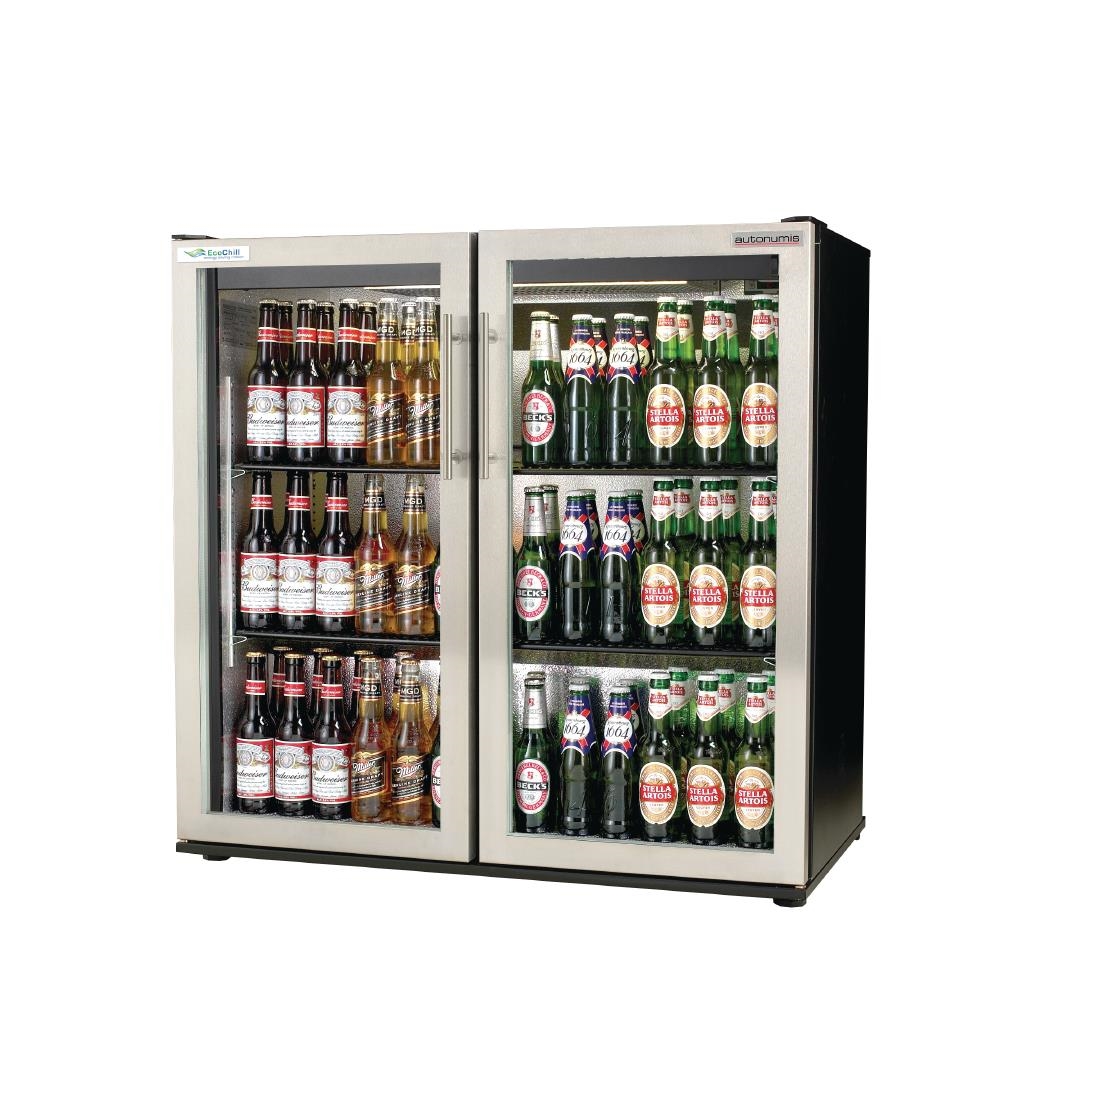 Refrigeration & Ice Machines